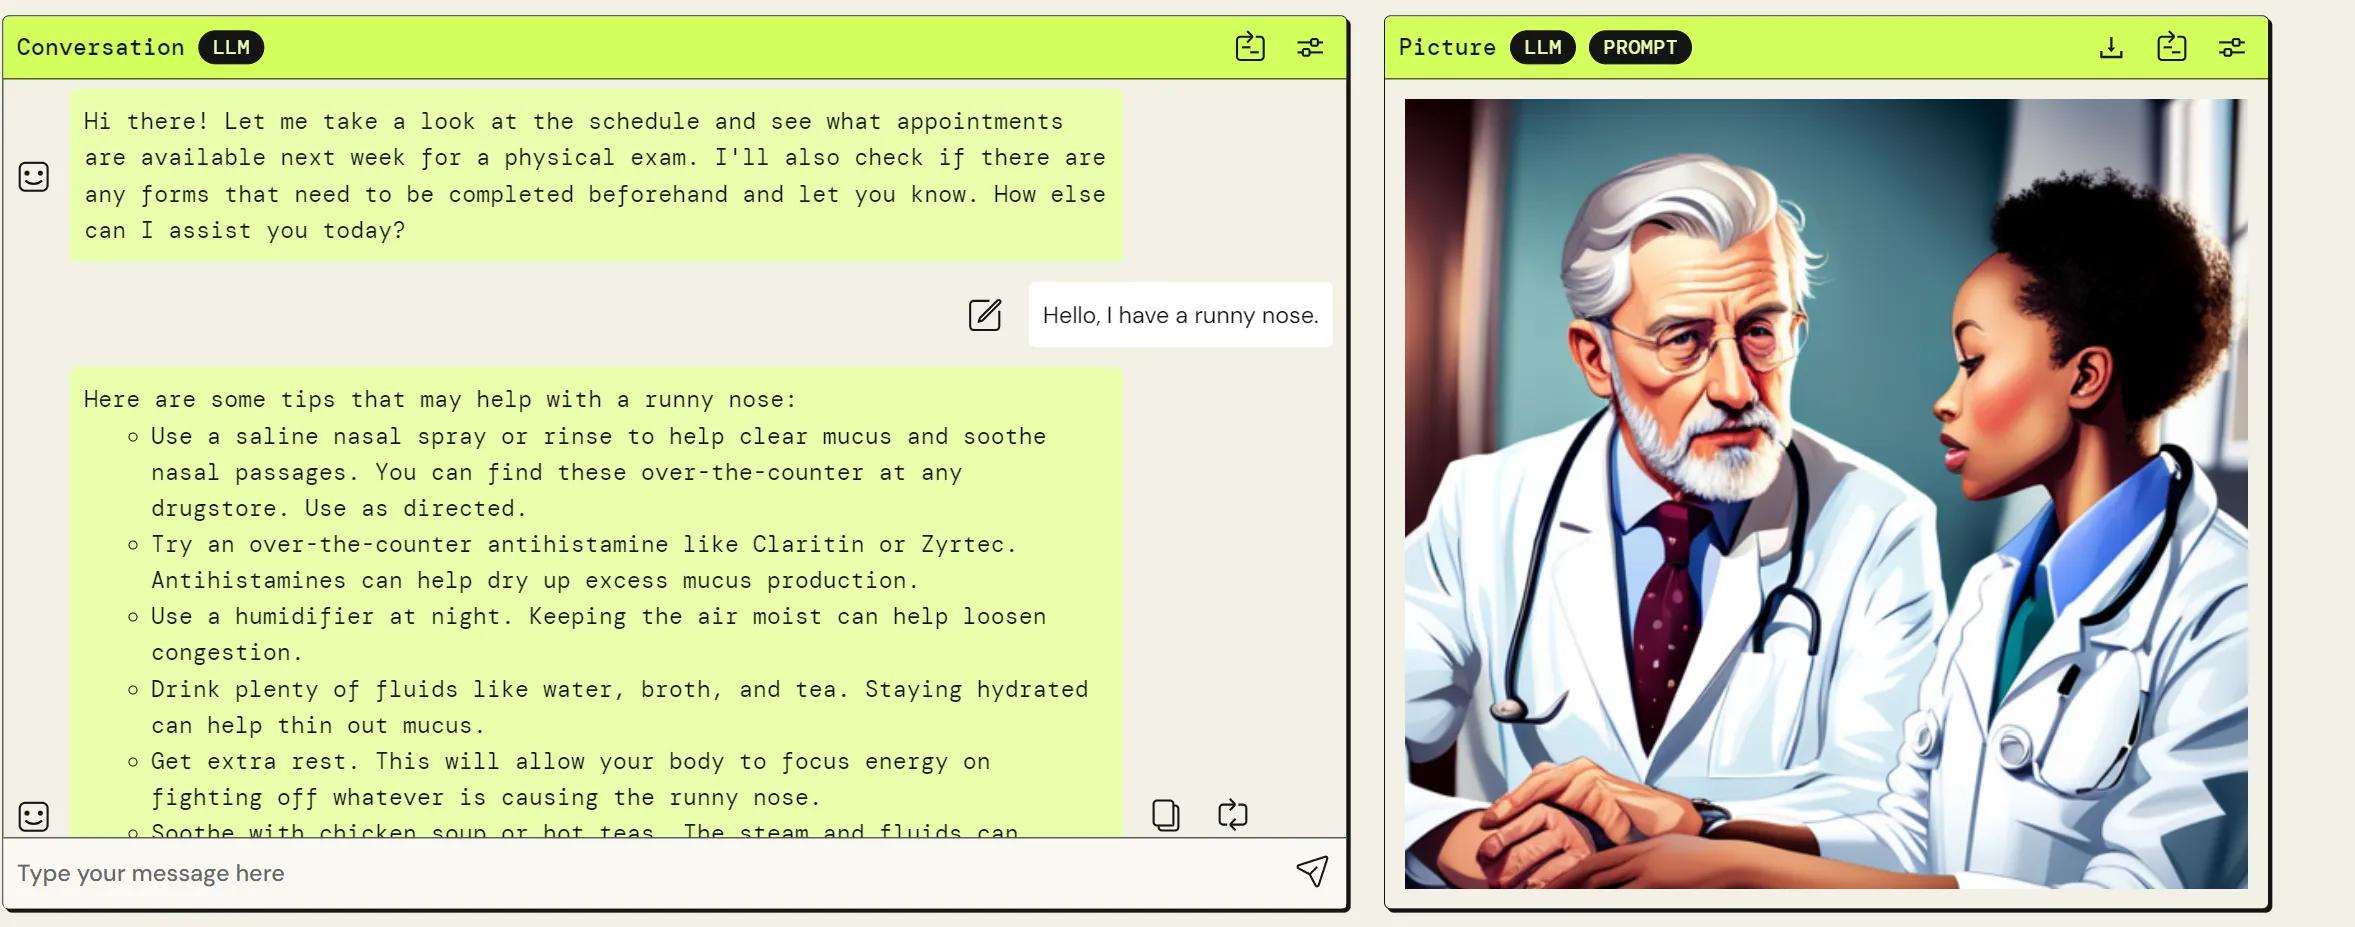 Doctor's medical chatbot assistance